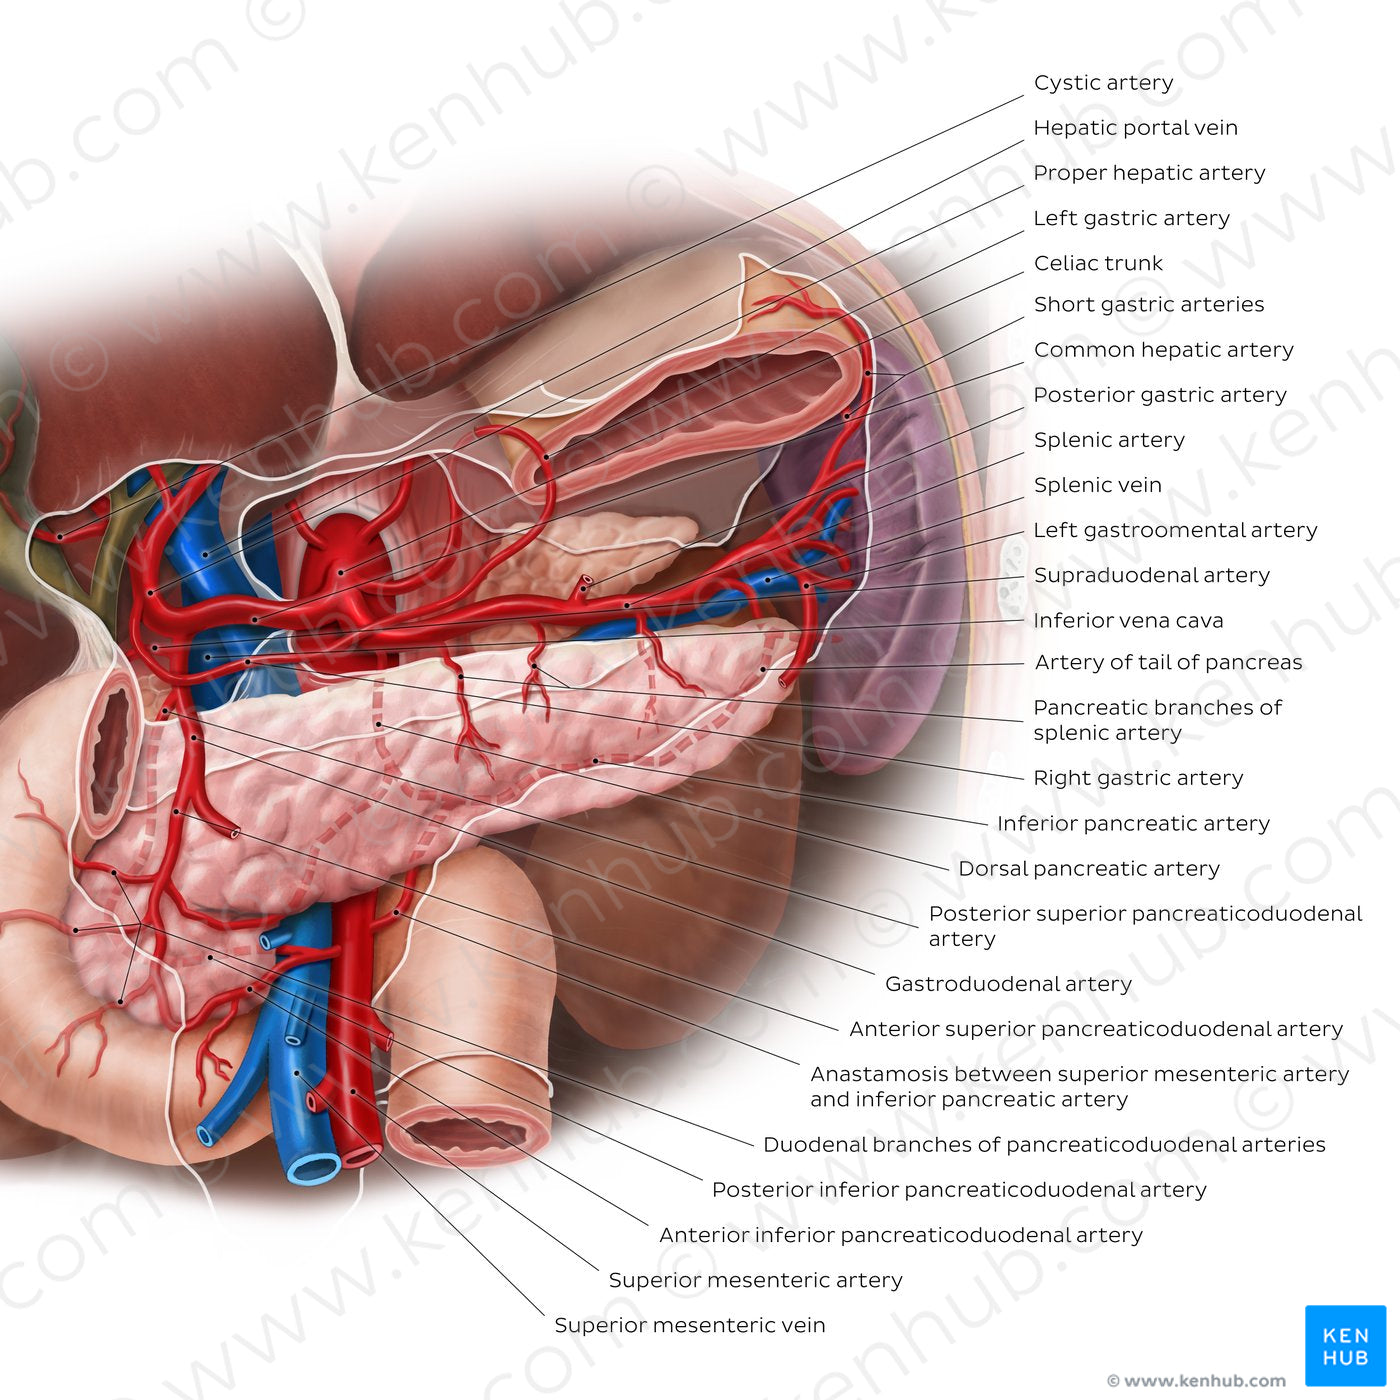 Arteries of the pancreas, duodenum and spleen (English)